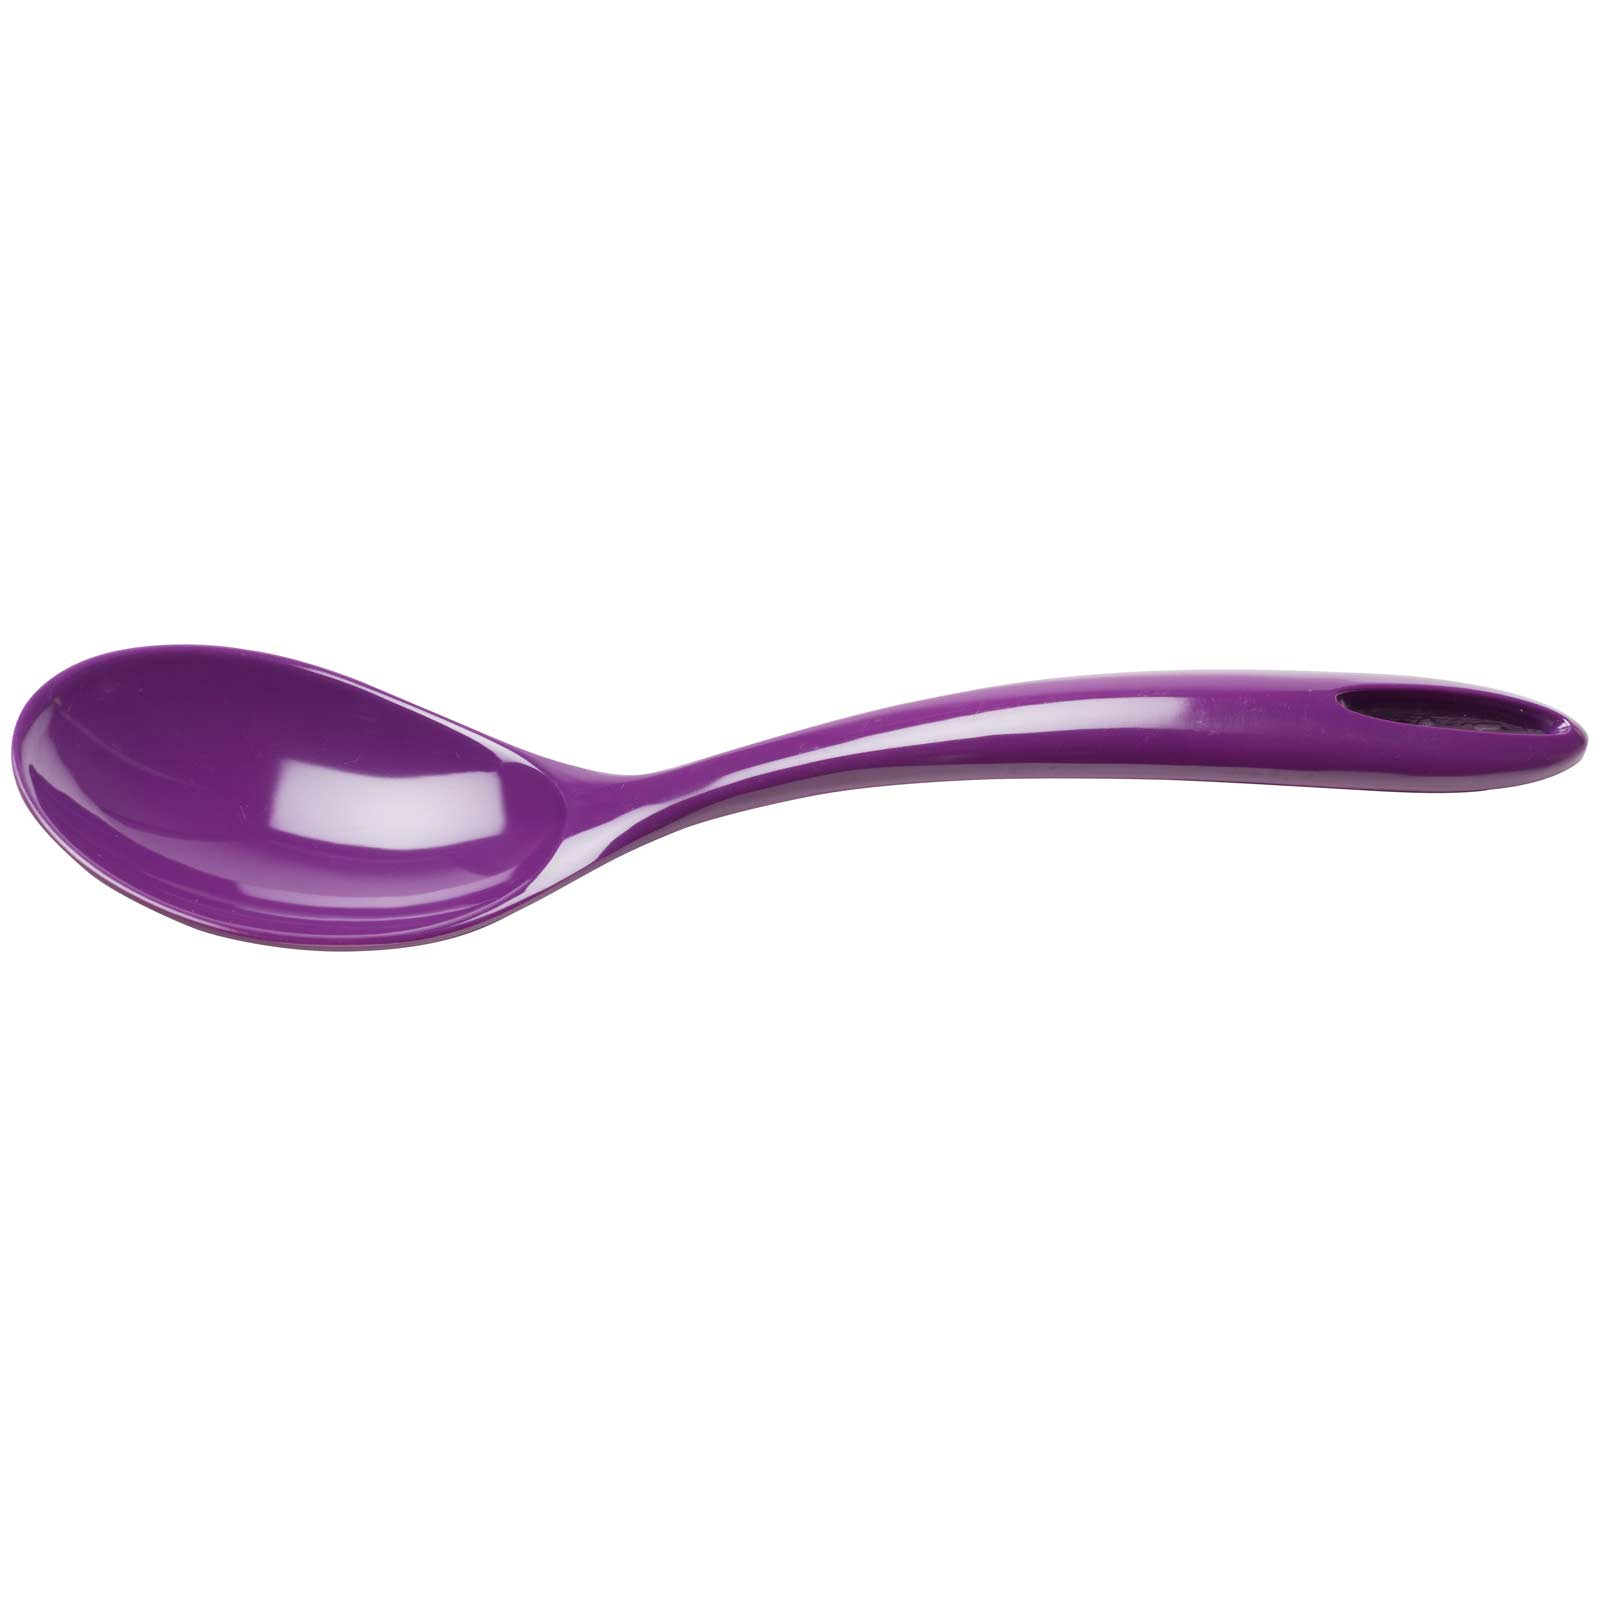 Splice kitchen spoon.